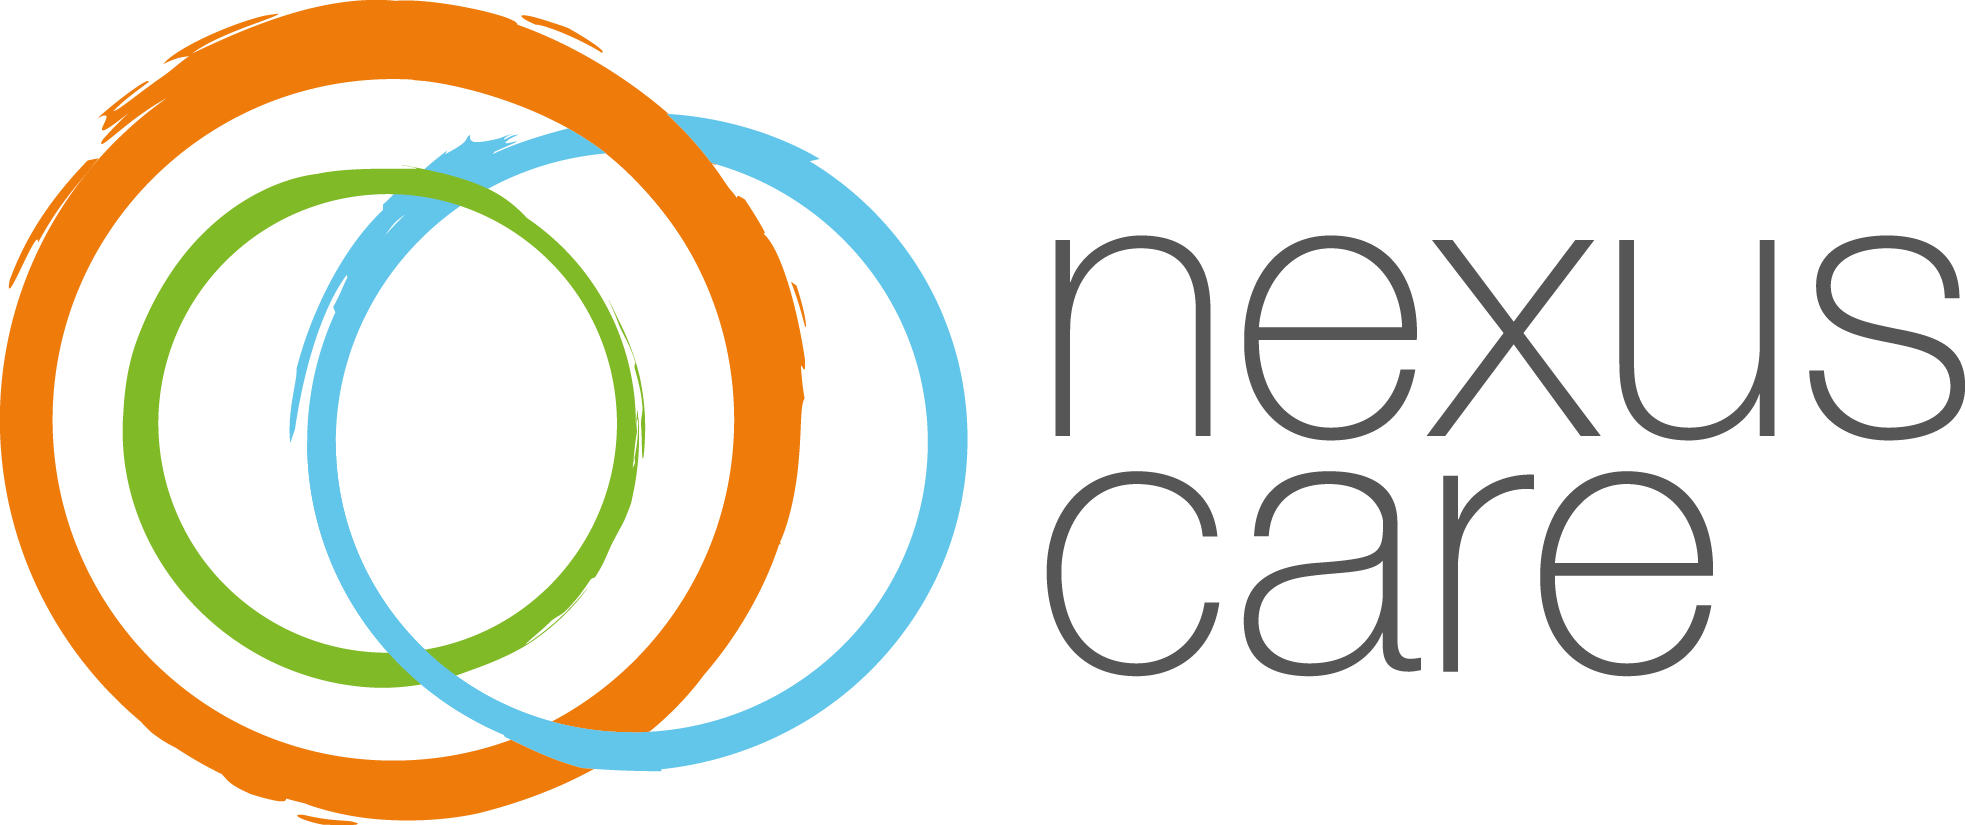 Nexus Care Inc logo